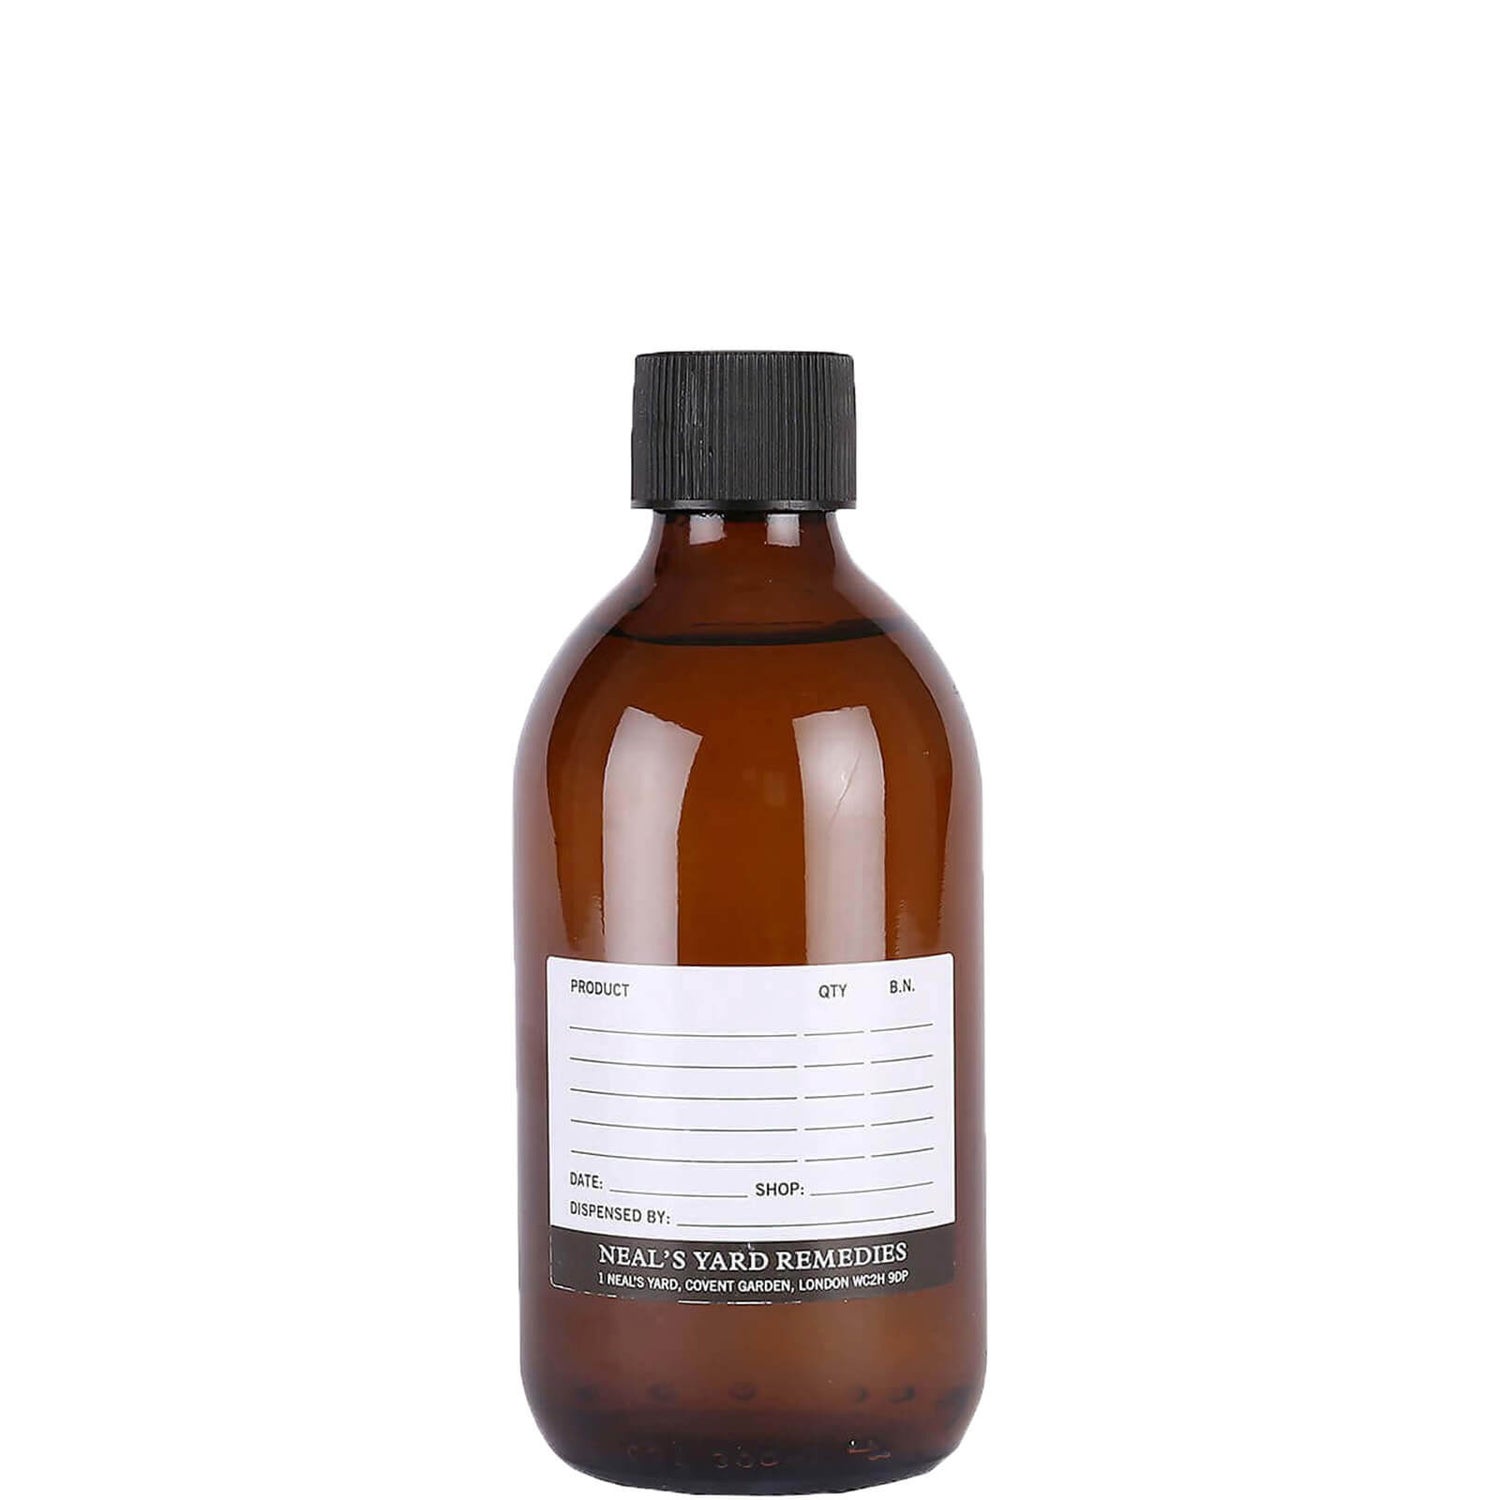 Ginkgo Single Herbal Tincture 150ml